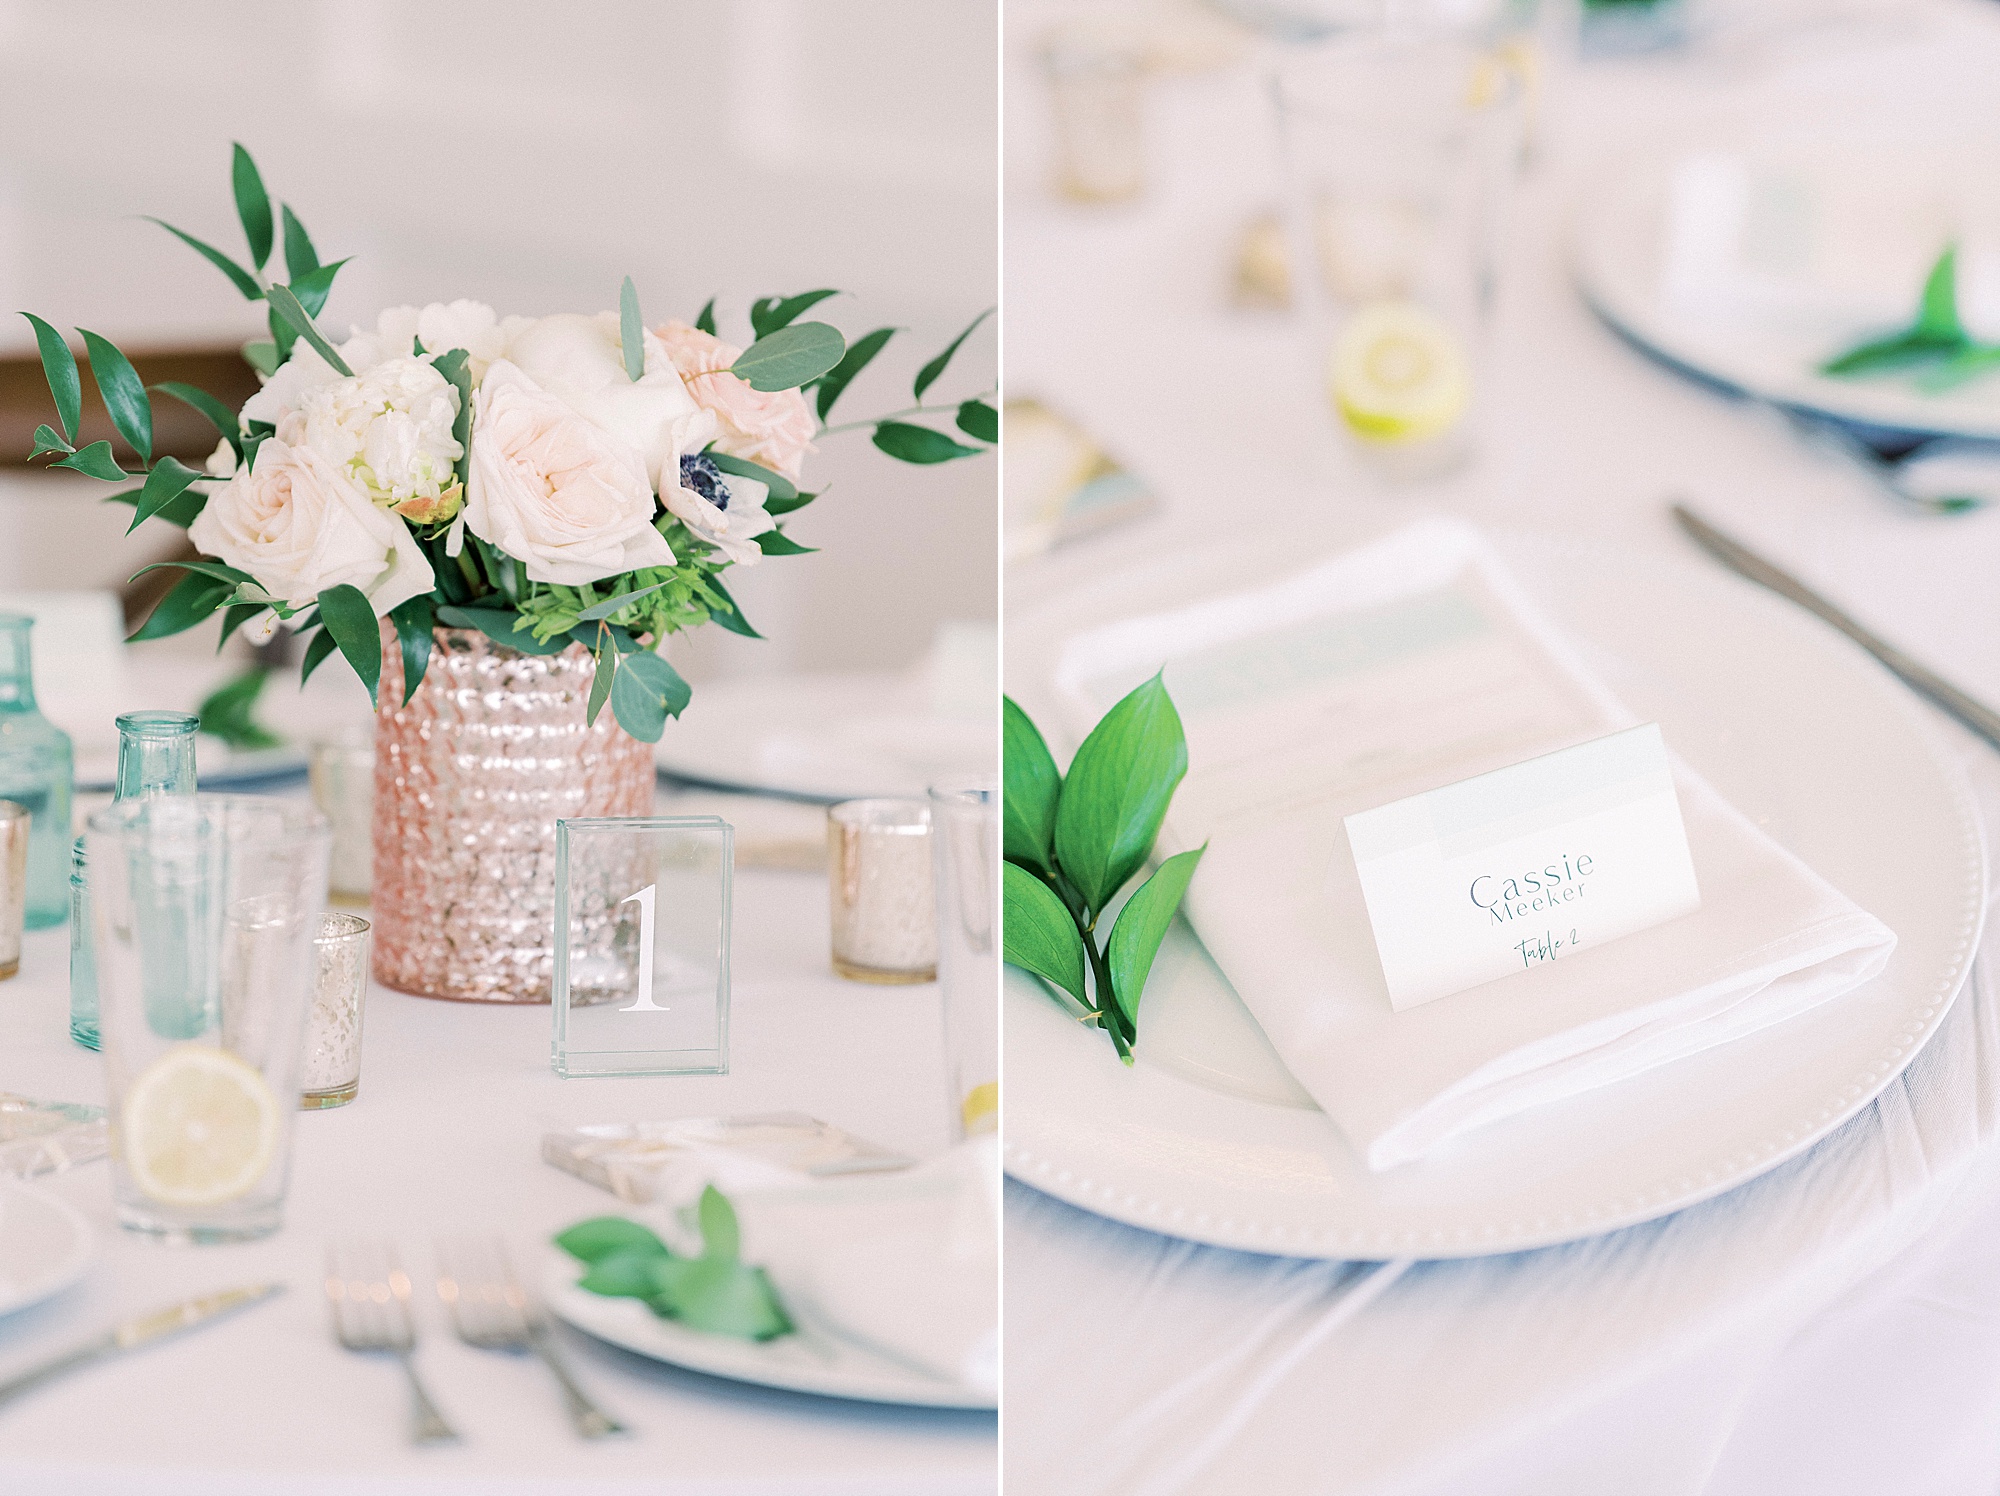 details for Oceanic Restaurant wedding reception